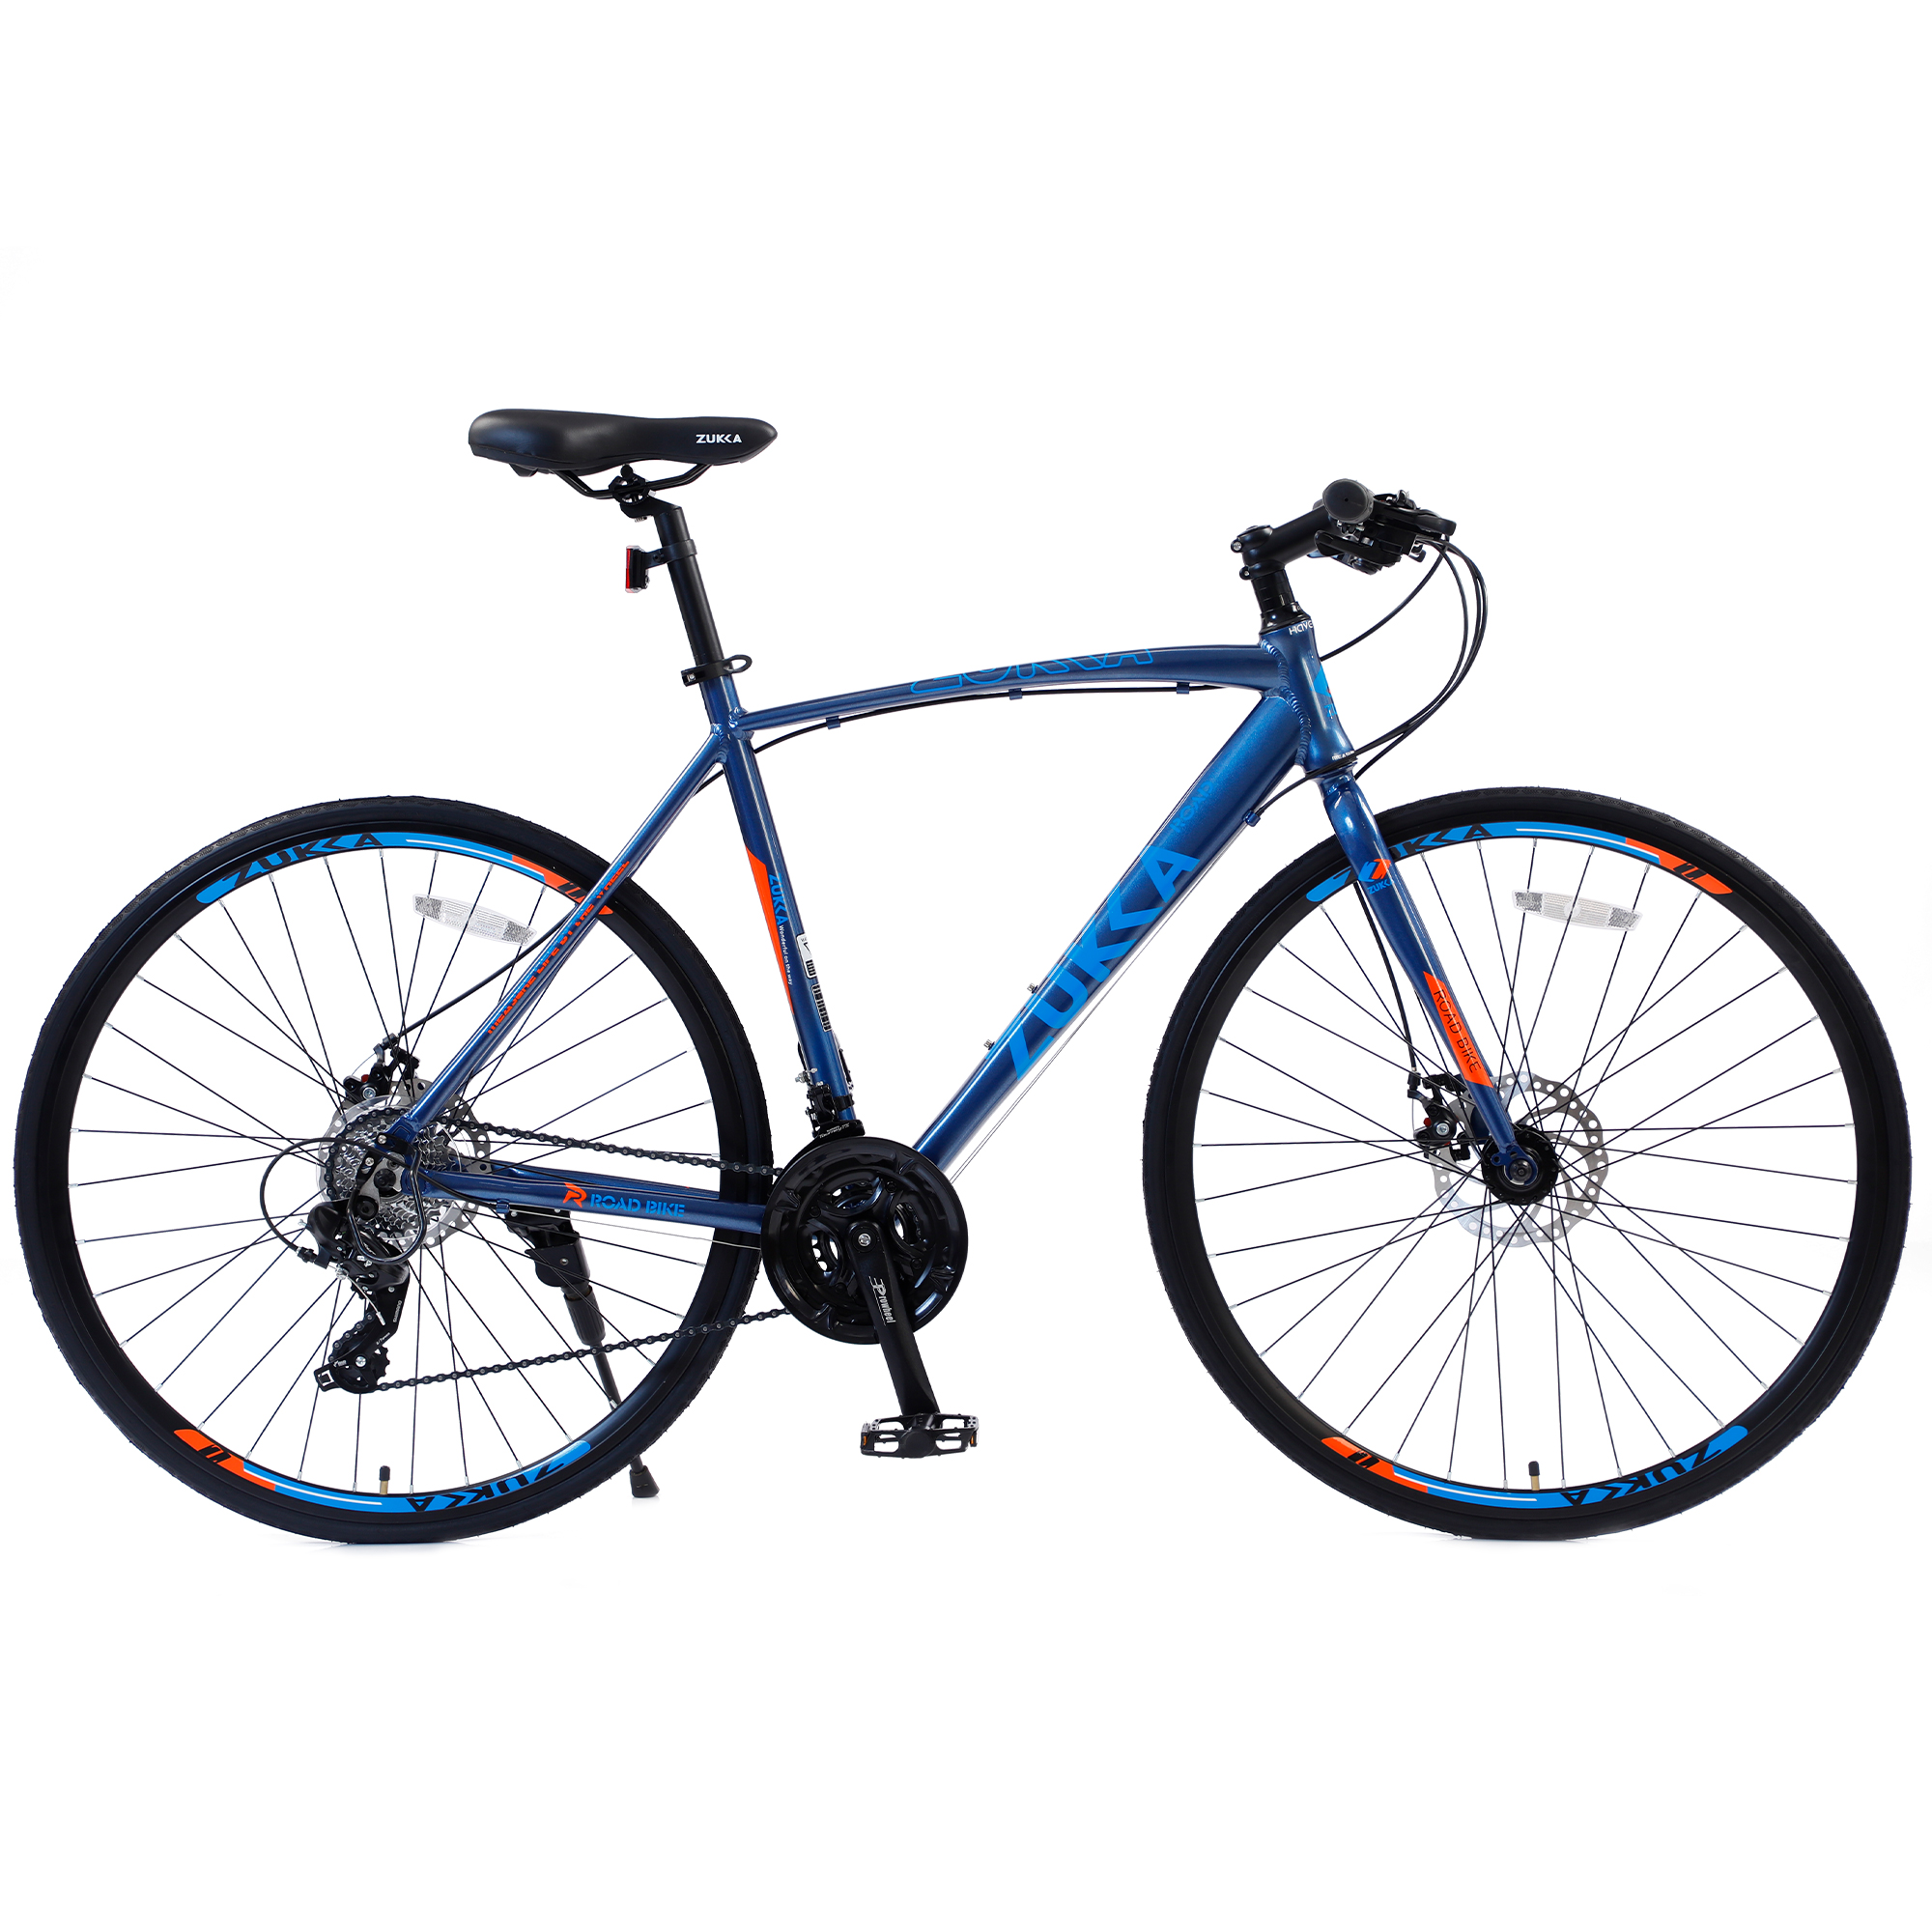 Zukka Road Bike 700C 24 Speed Aluminum Alloy Frame Bicycle for Unisex Adult Deep Blue Hybrid Bike - image 5 of 7